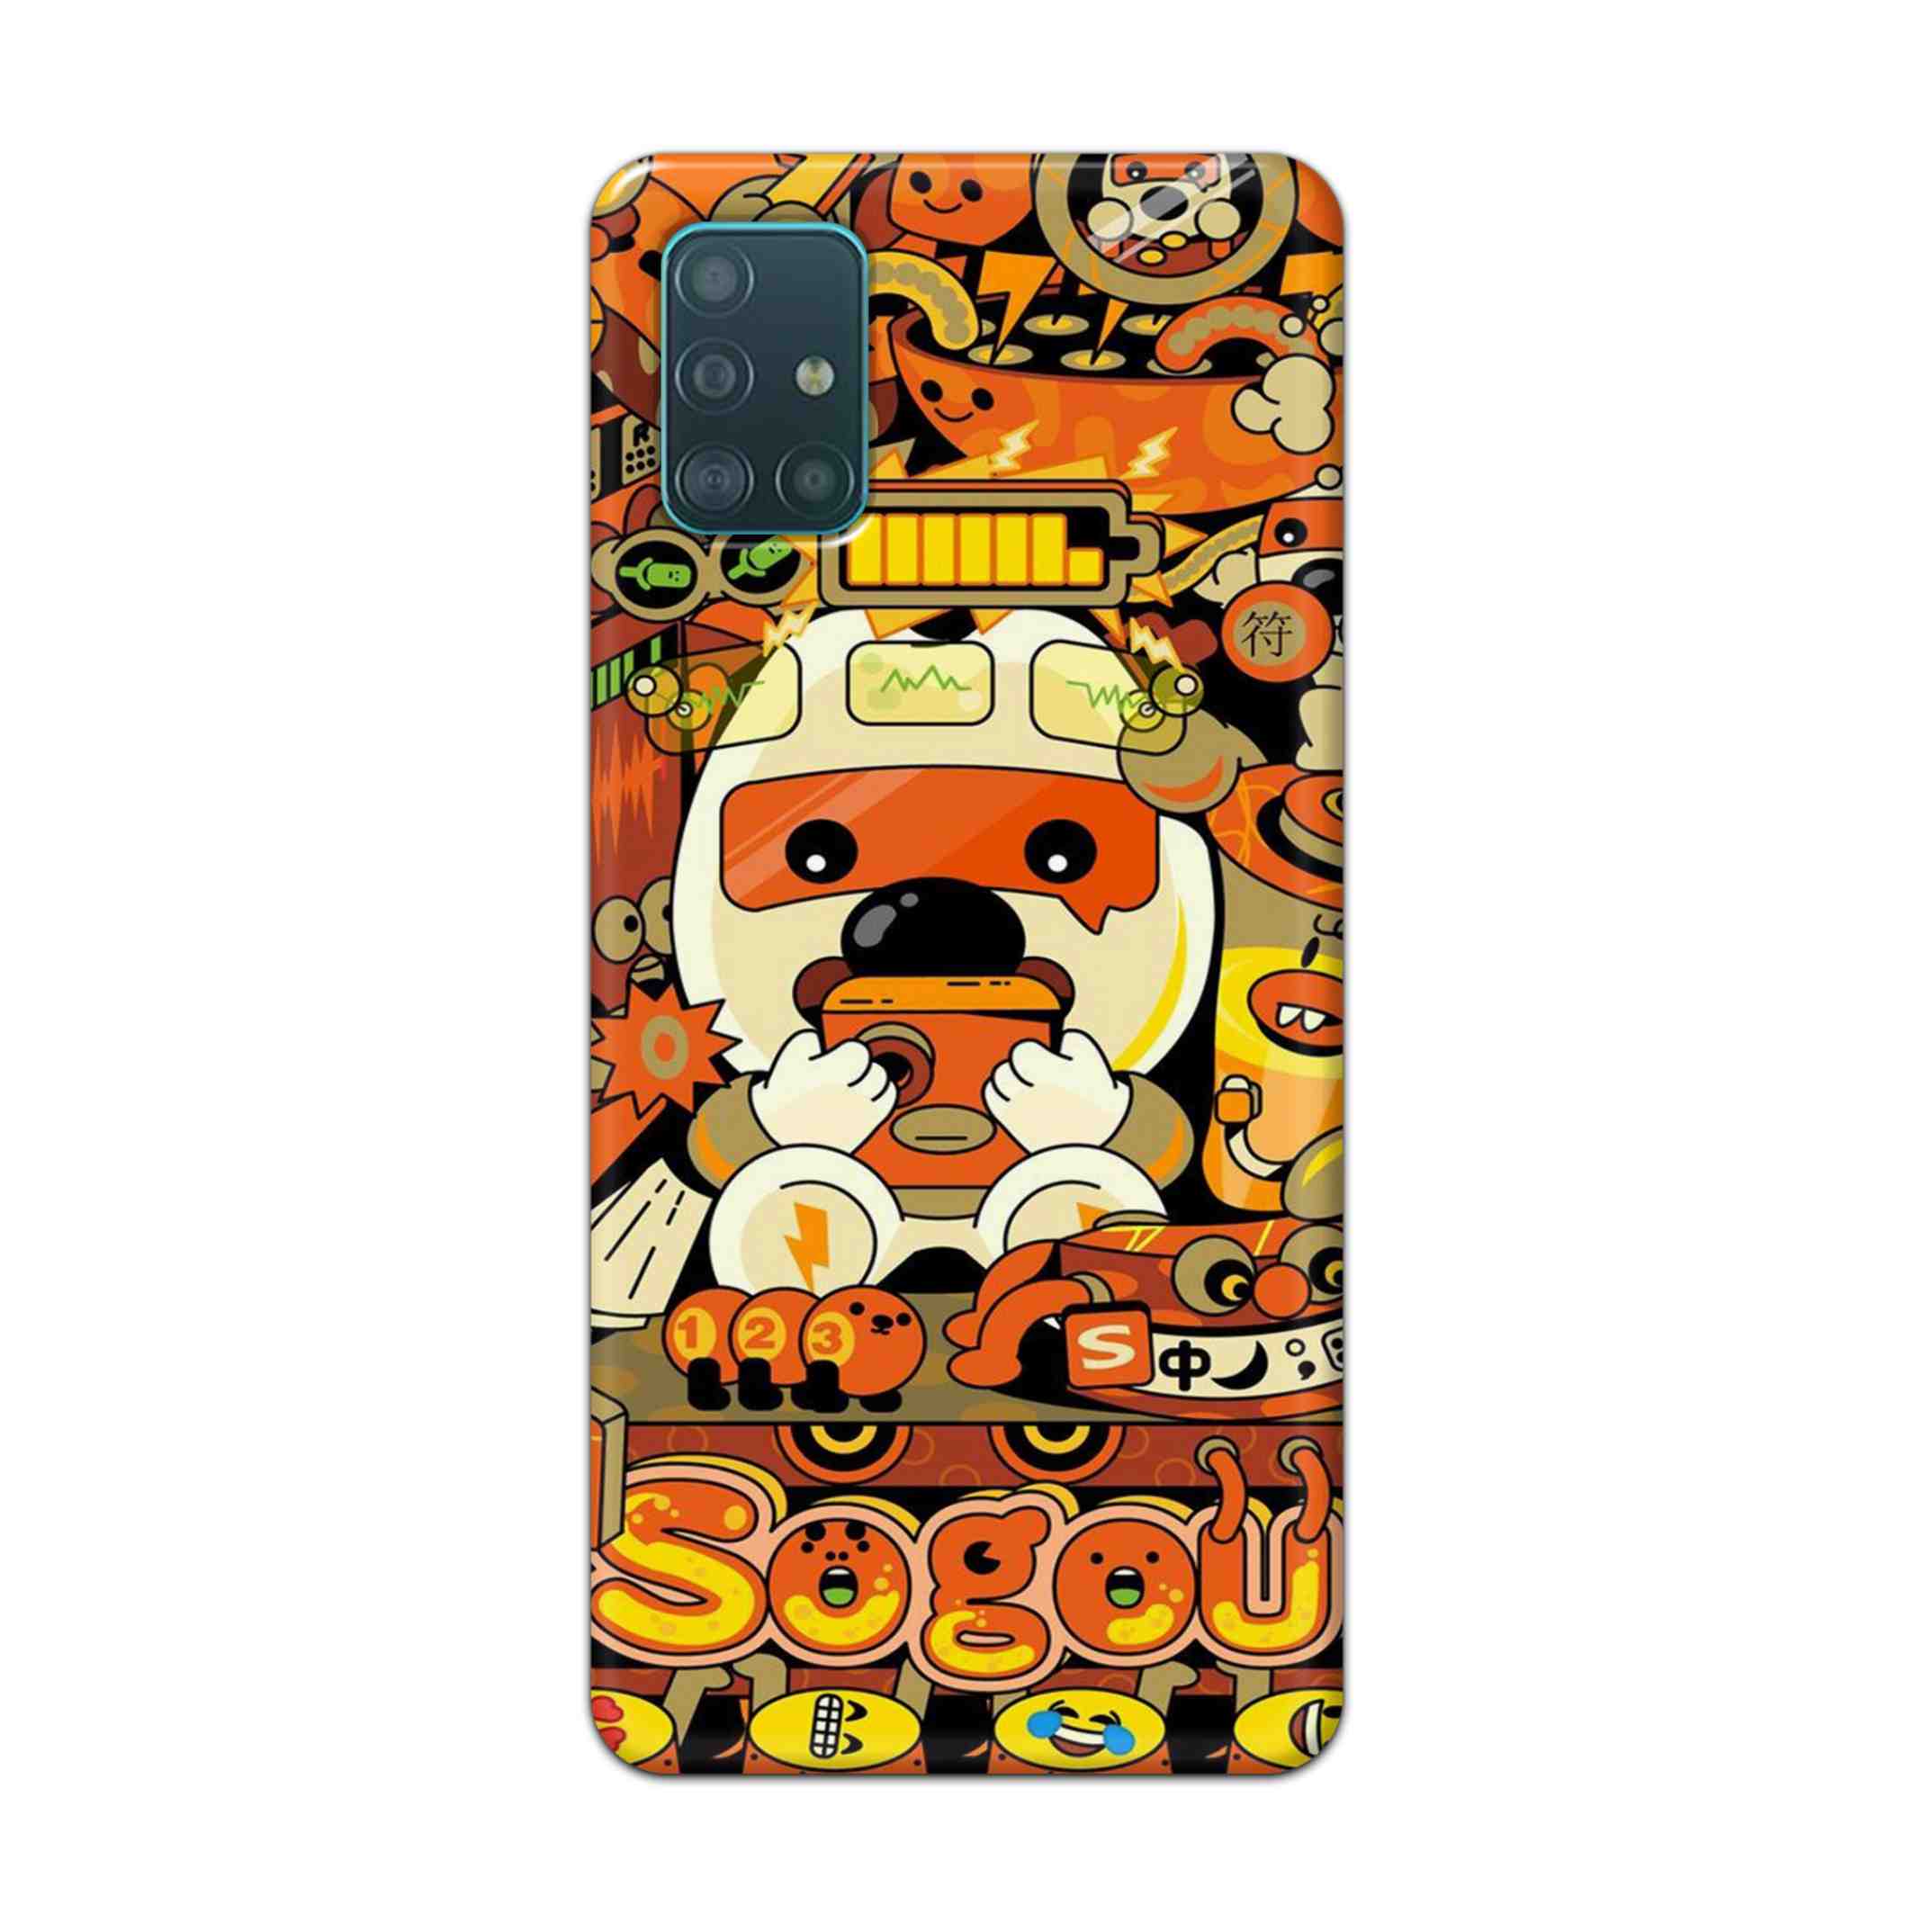 Buy Sogou Hard Back Mobile Phone Case Cover For Samsung A51 Online